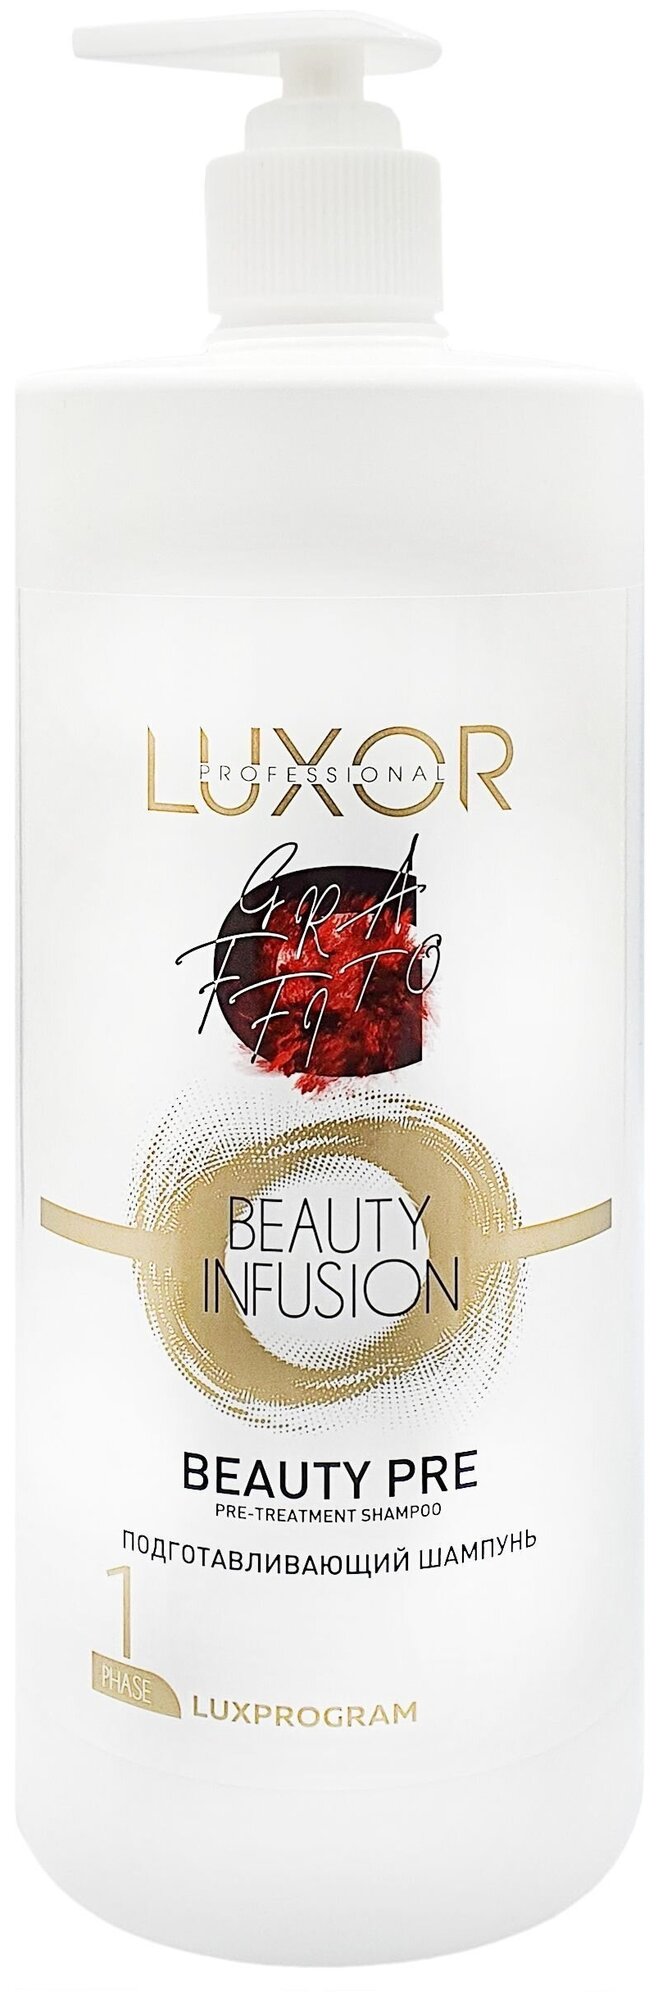 Luxor Professional. Подготавливающий шампунь. Beauty infusion. 1000 мл.